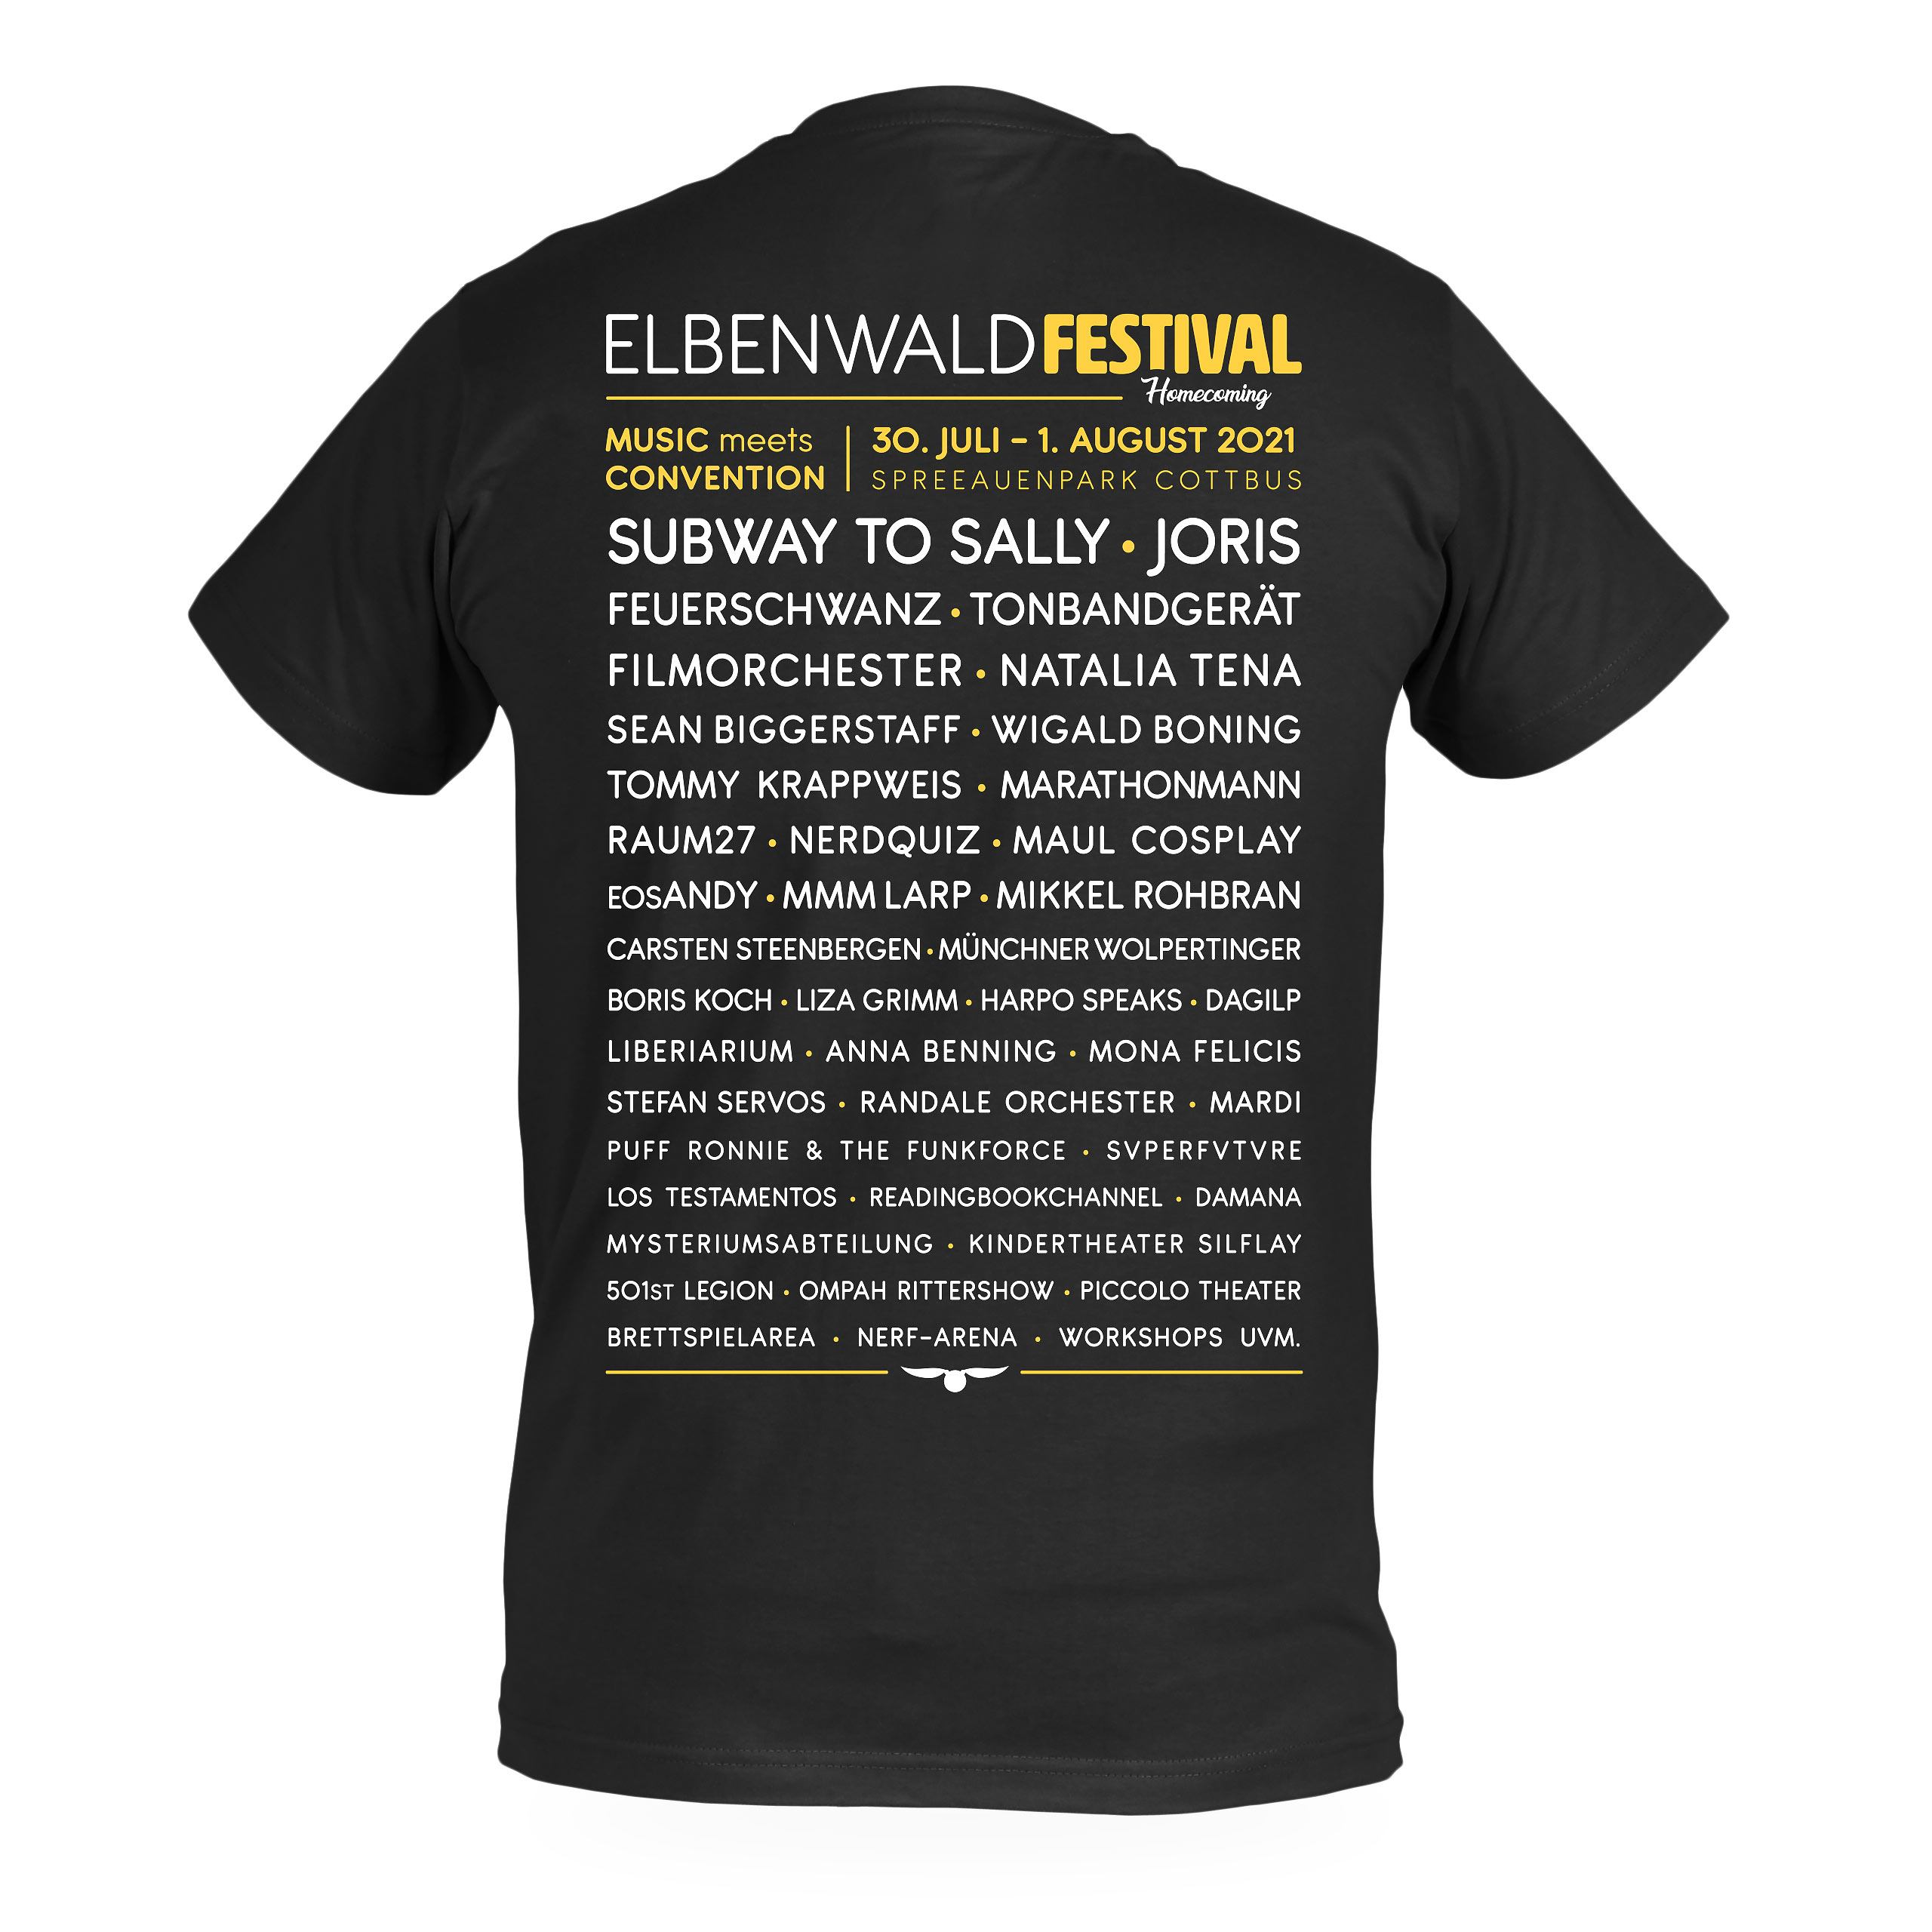 Elbenwald Festival Homecoming T-Shirt black